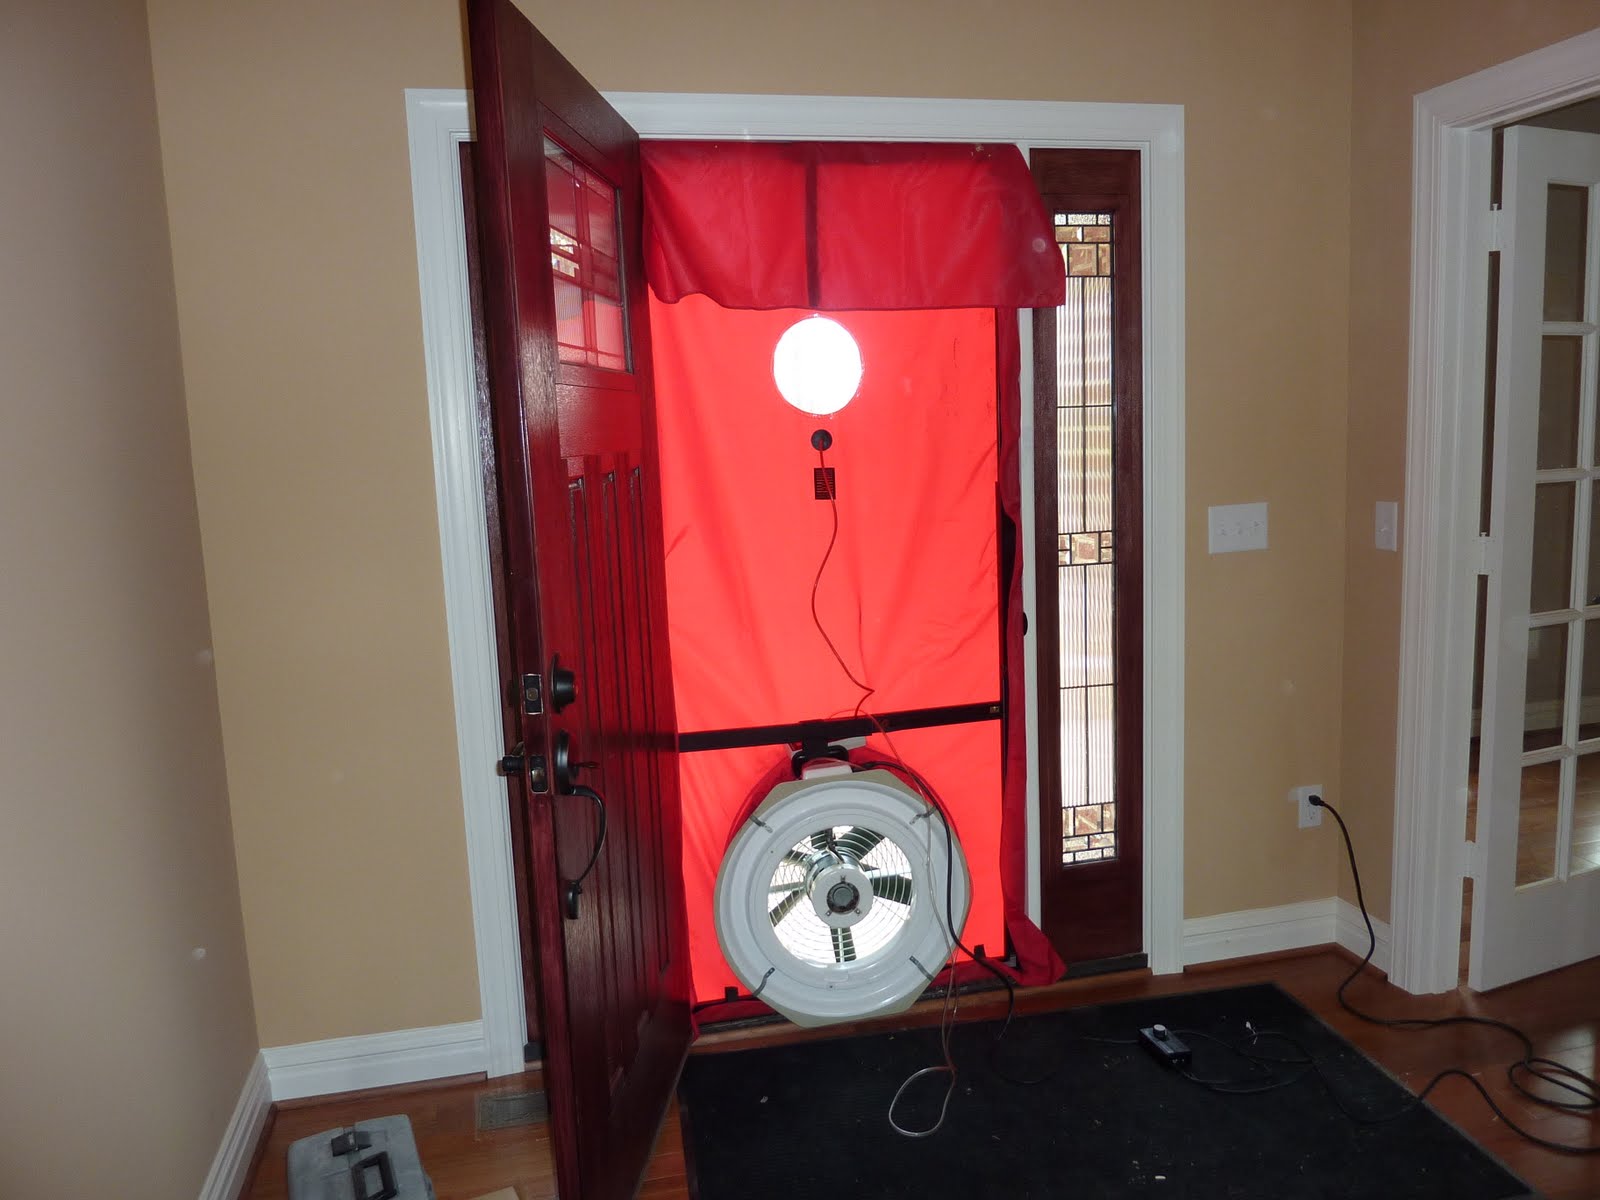 A blower door test setup (not our house)